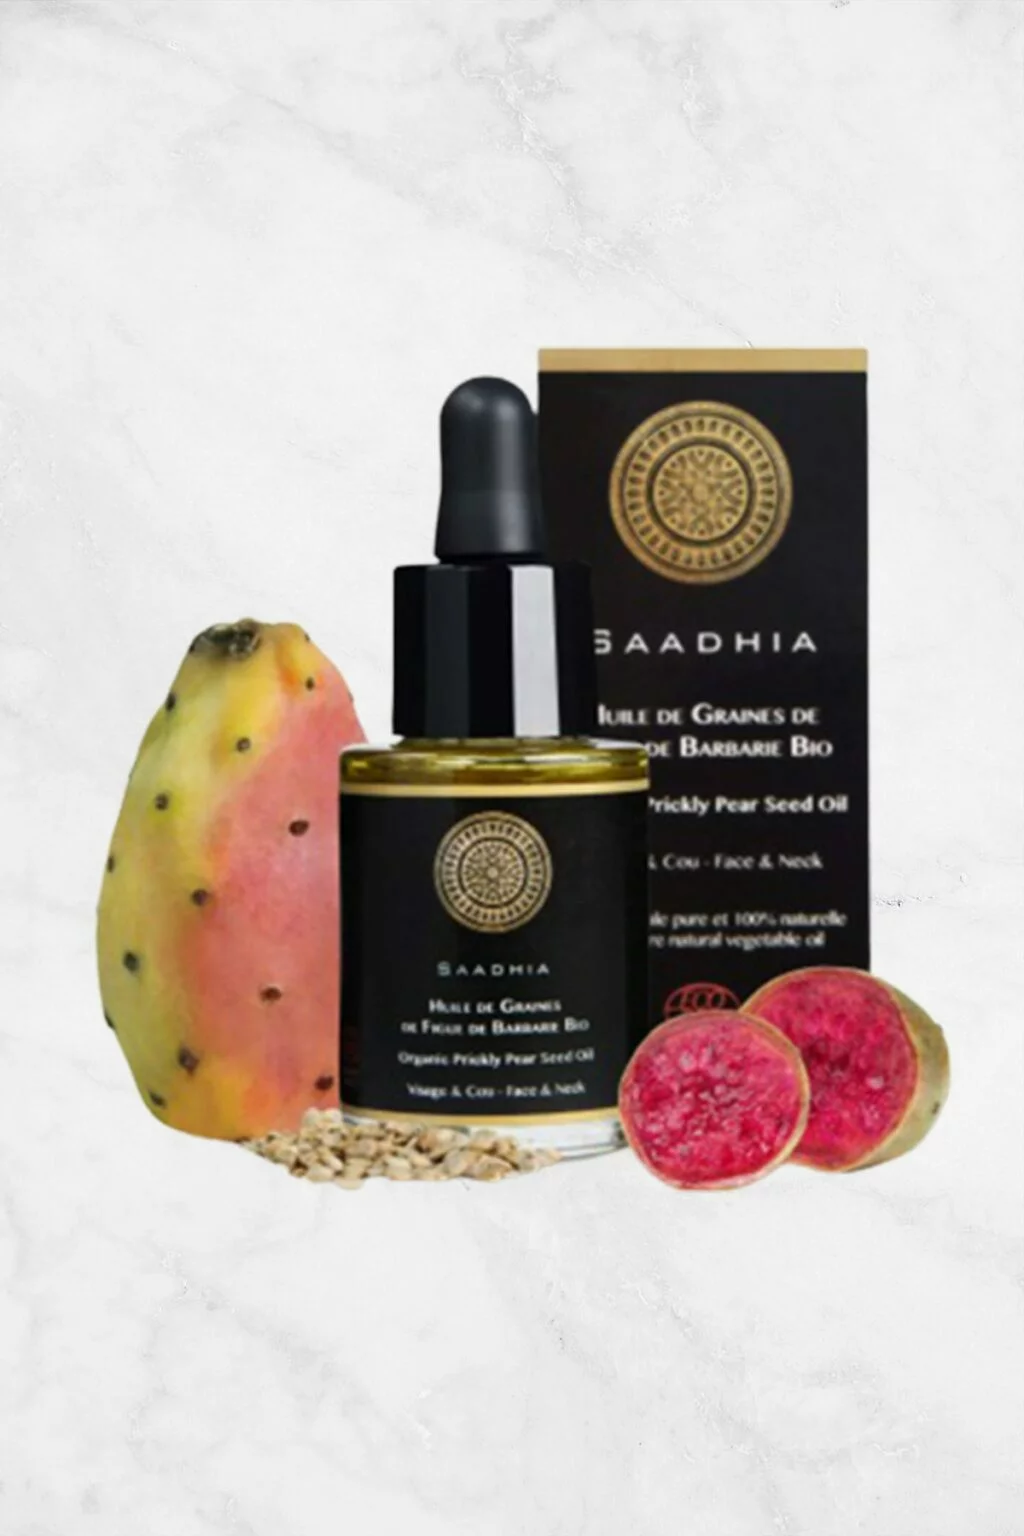 huile vierge de graines de figue de Barbarie bio Saadhia avec fond